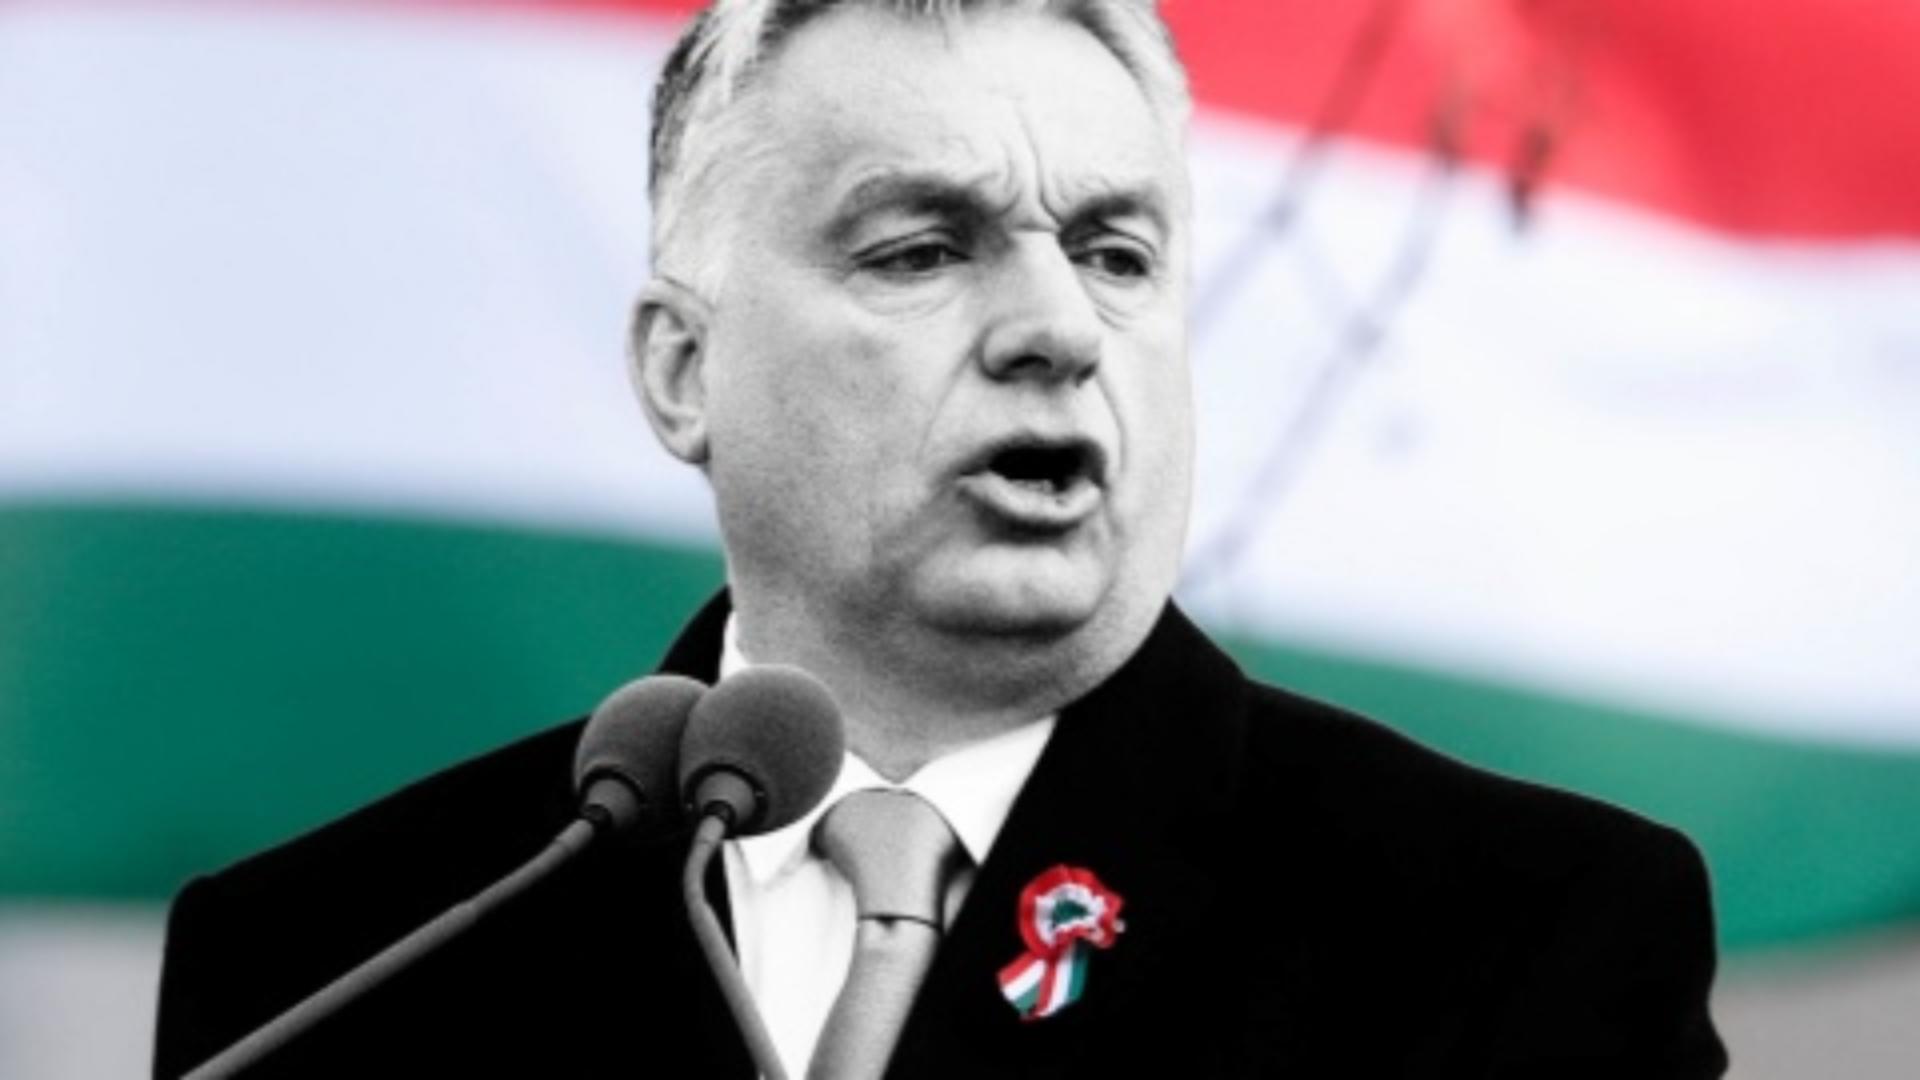 Viktor Orban, premierul Ungariei